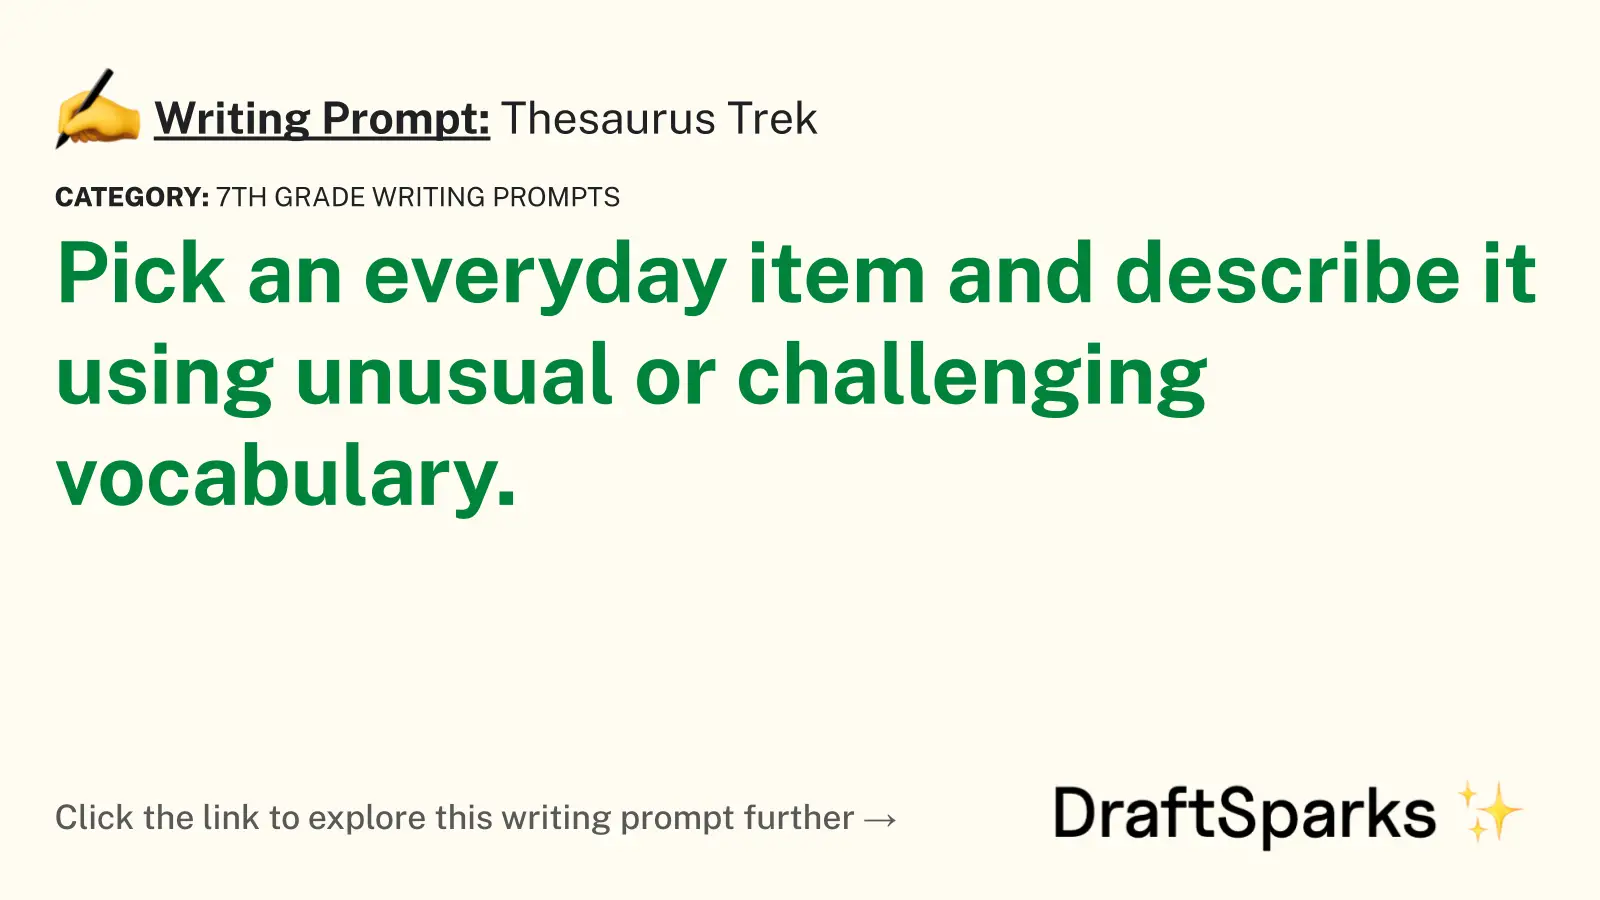 Thesaurus Trek